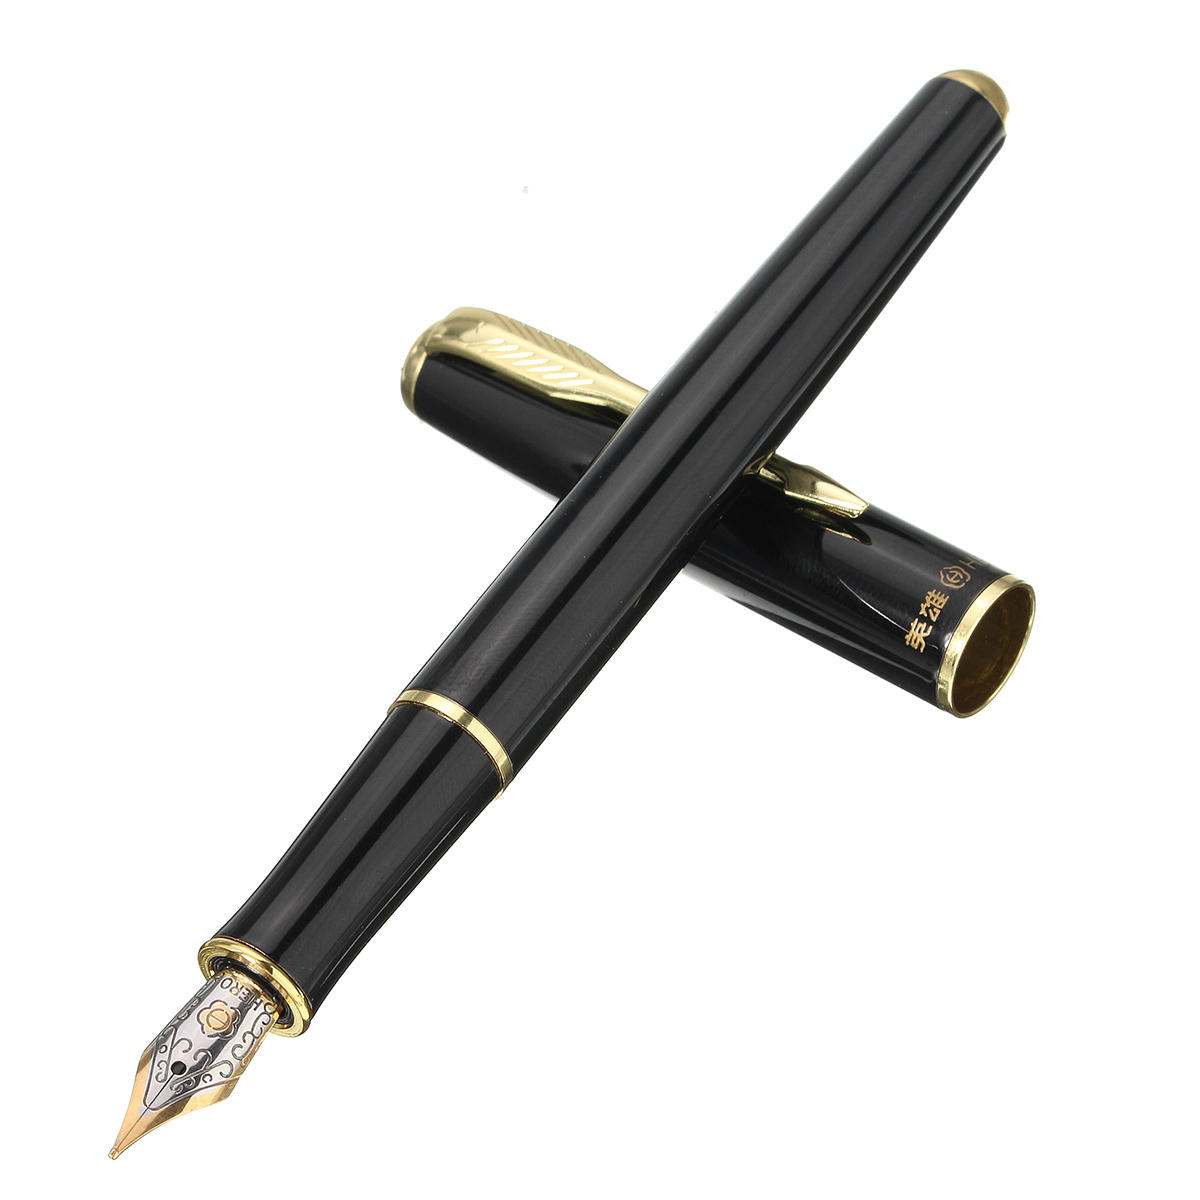 5 PCS Baoer Medium Nib Fountain Pen Excellent High Quality and Wholesale Price 